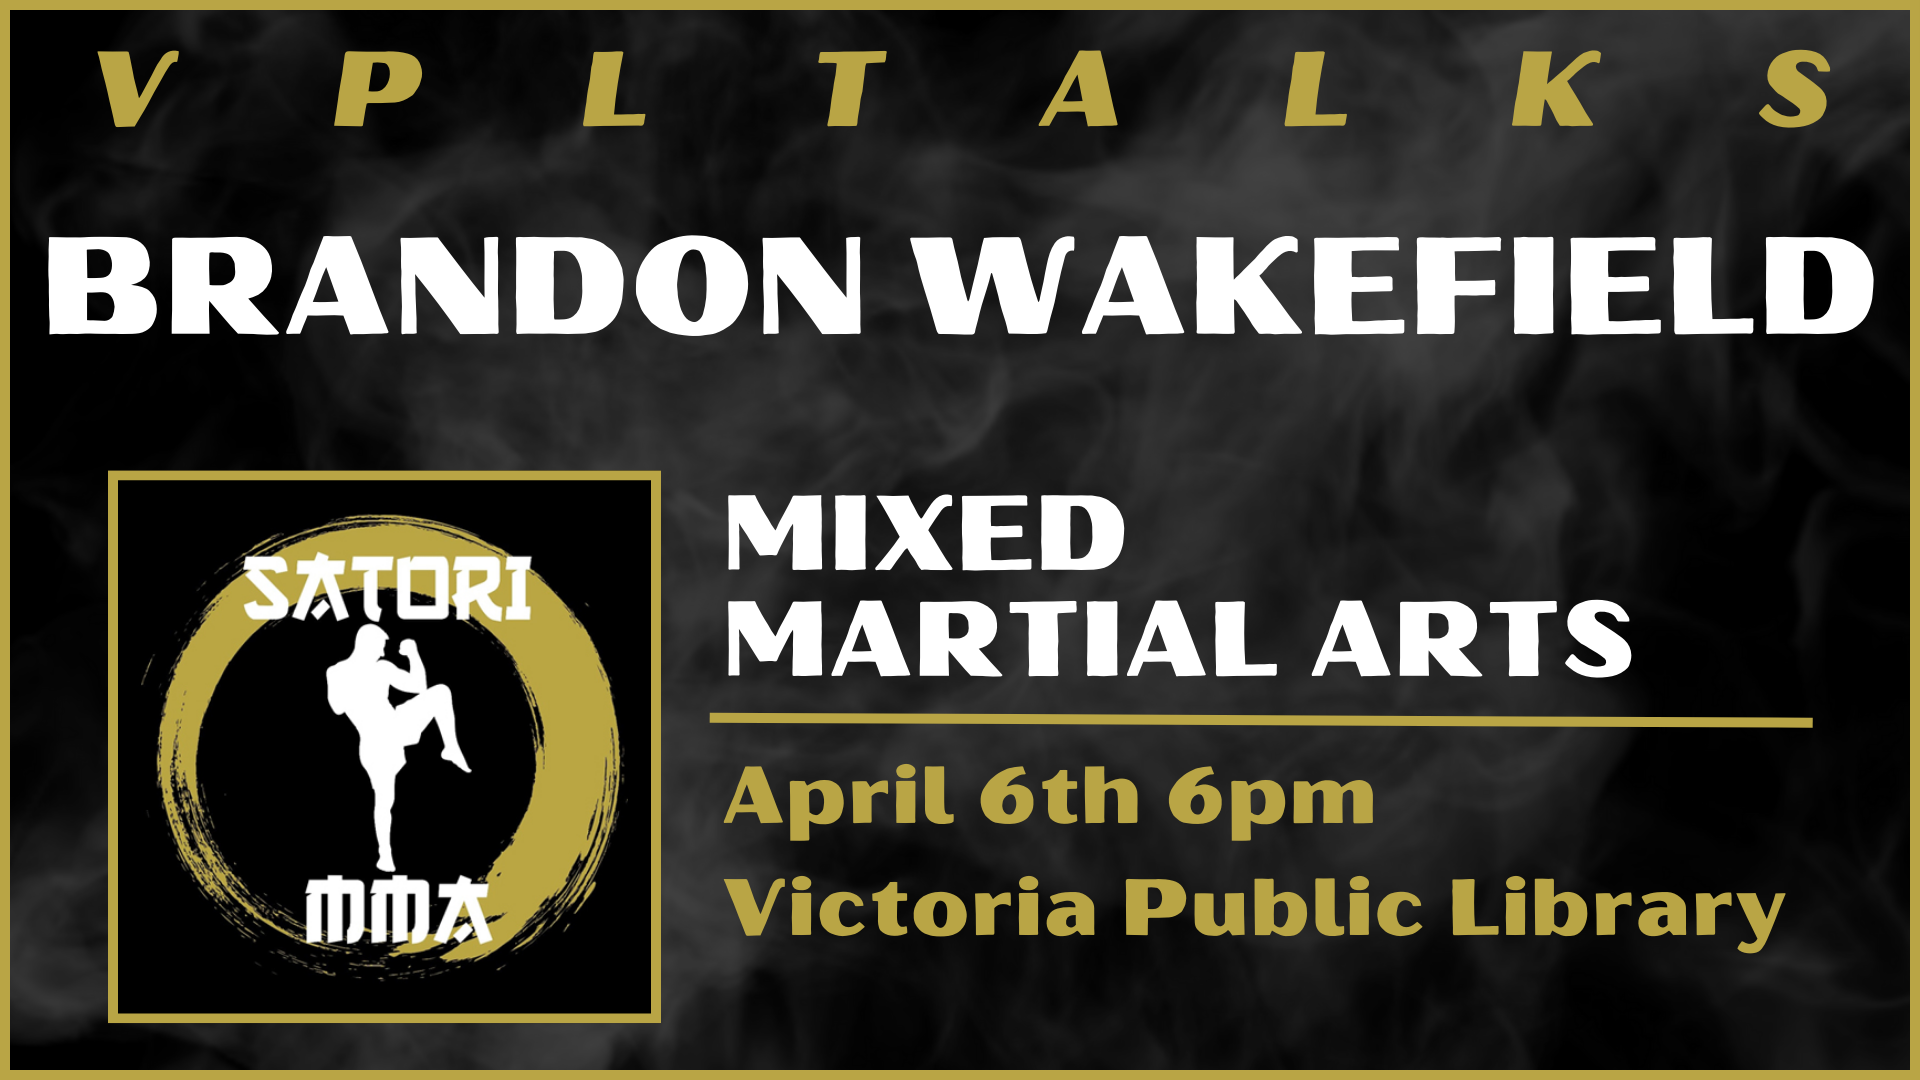 VPL Talks with Brandon Wakefield, April 6th at 6pm